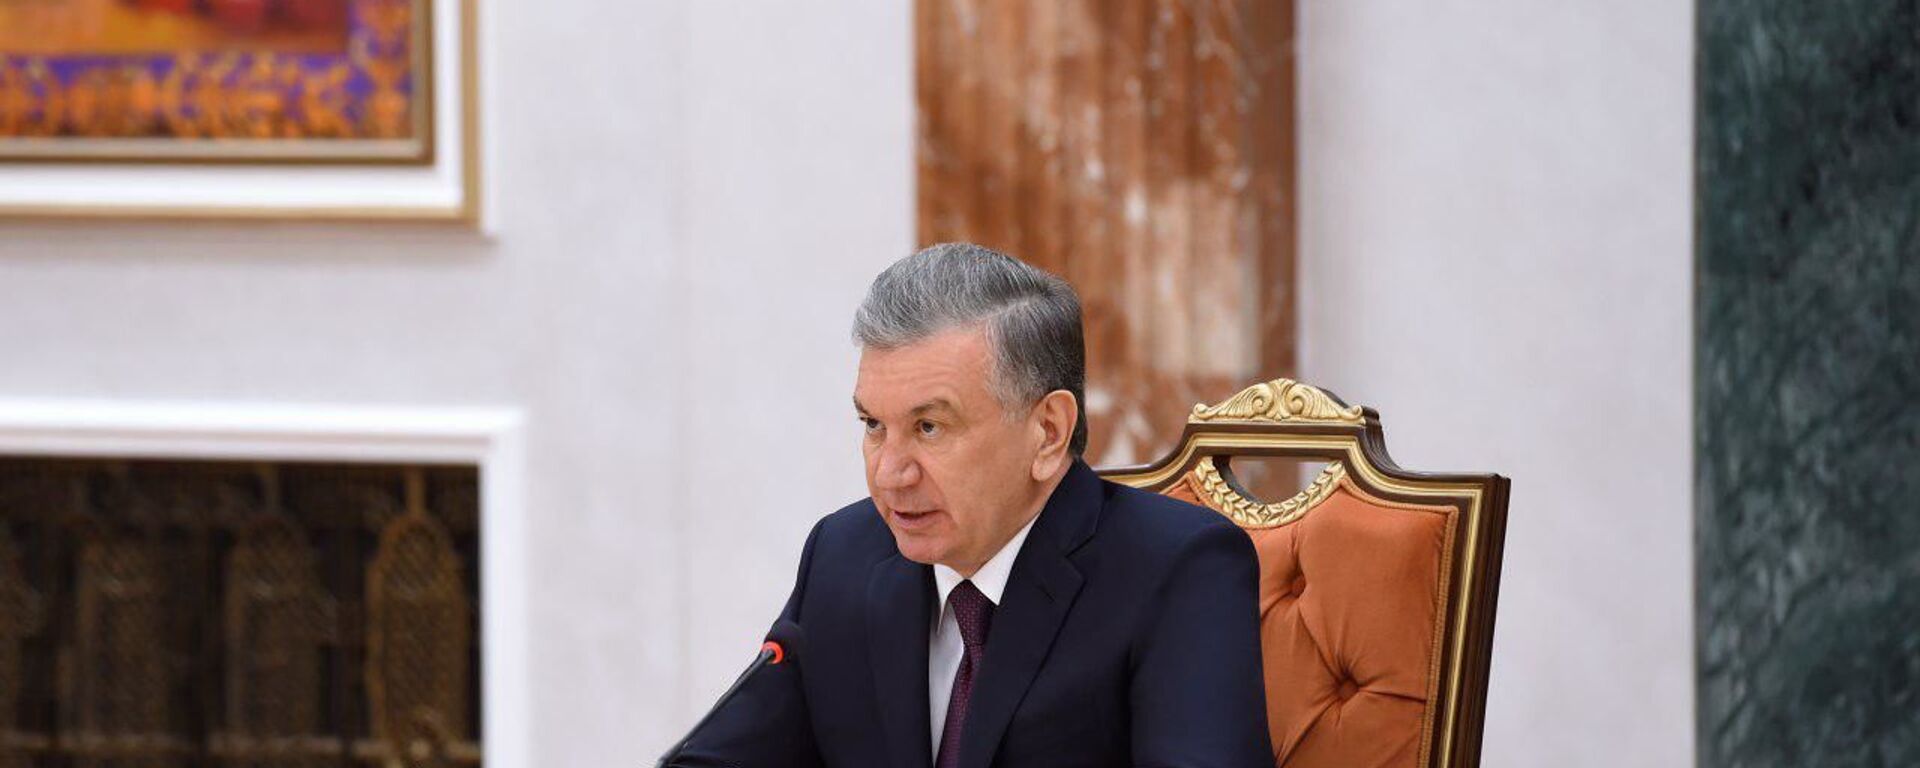 Президент Узбекистана Шавкат Мирзиёев - Sputnik Таджикистан, 1920, 13.05.2021